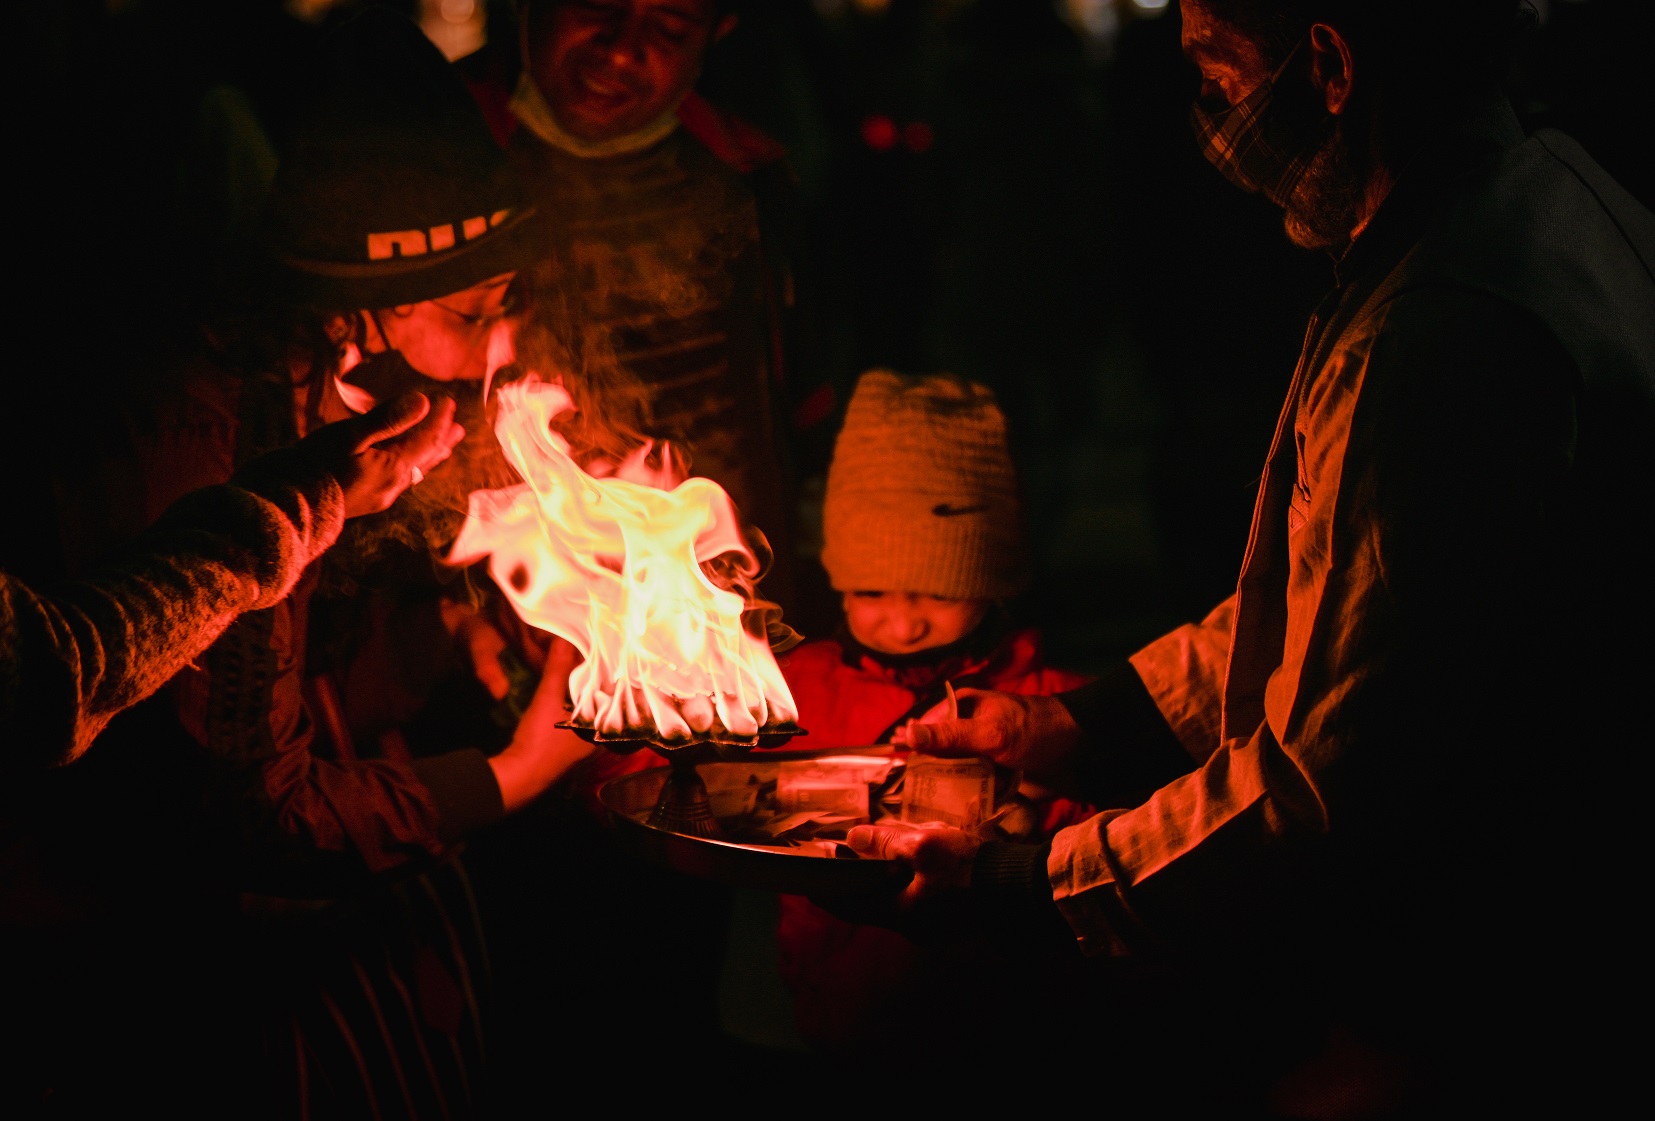 hindu festival kumbh mela being celebrated in haridwar, India, despite COVID